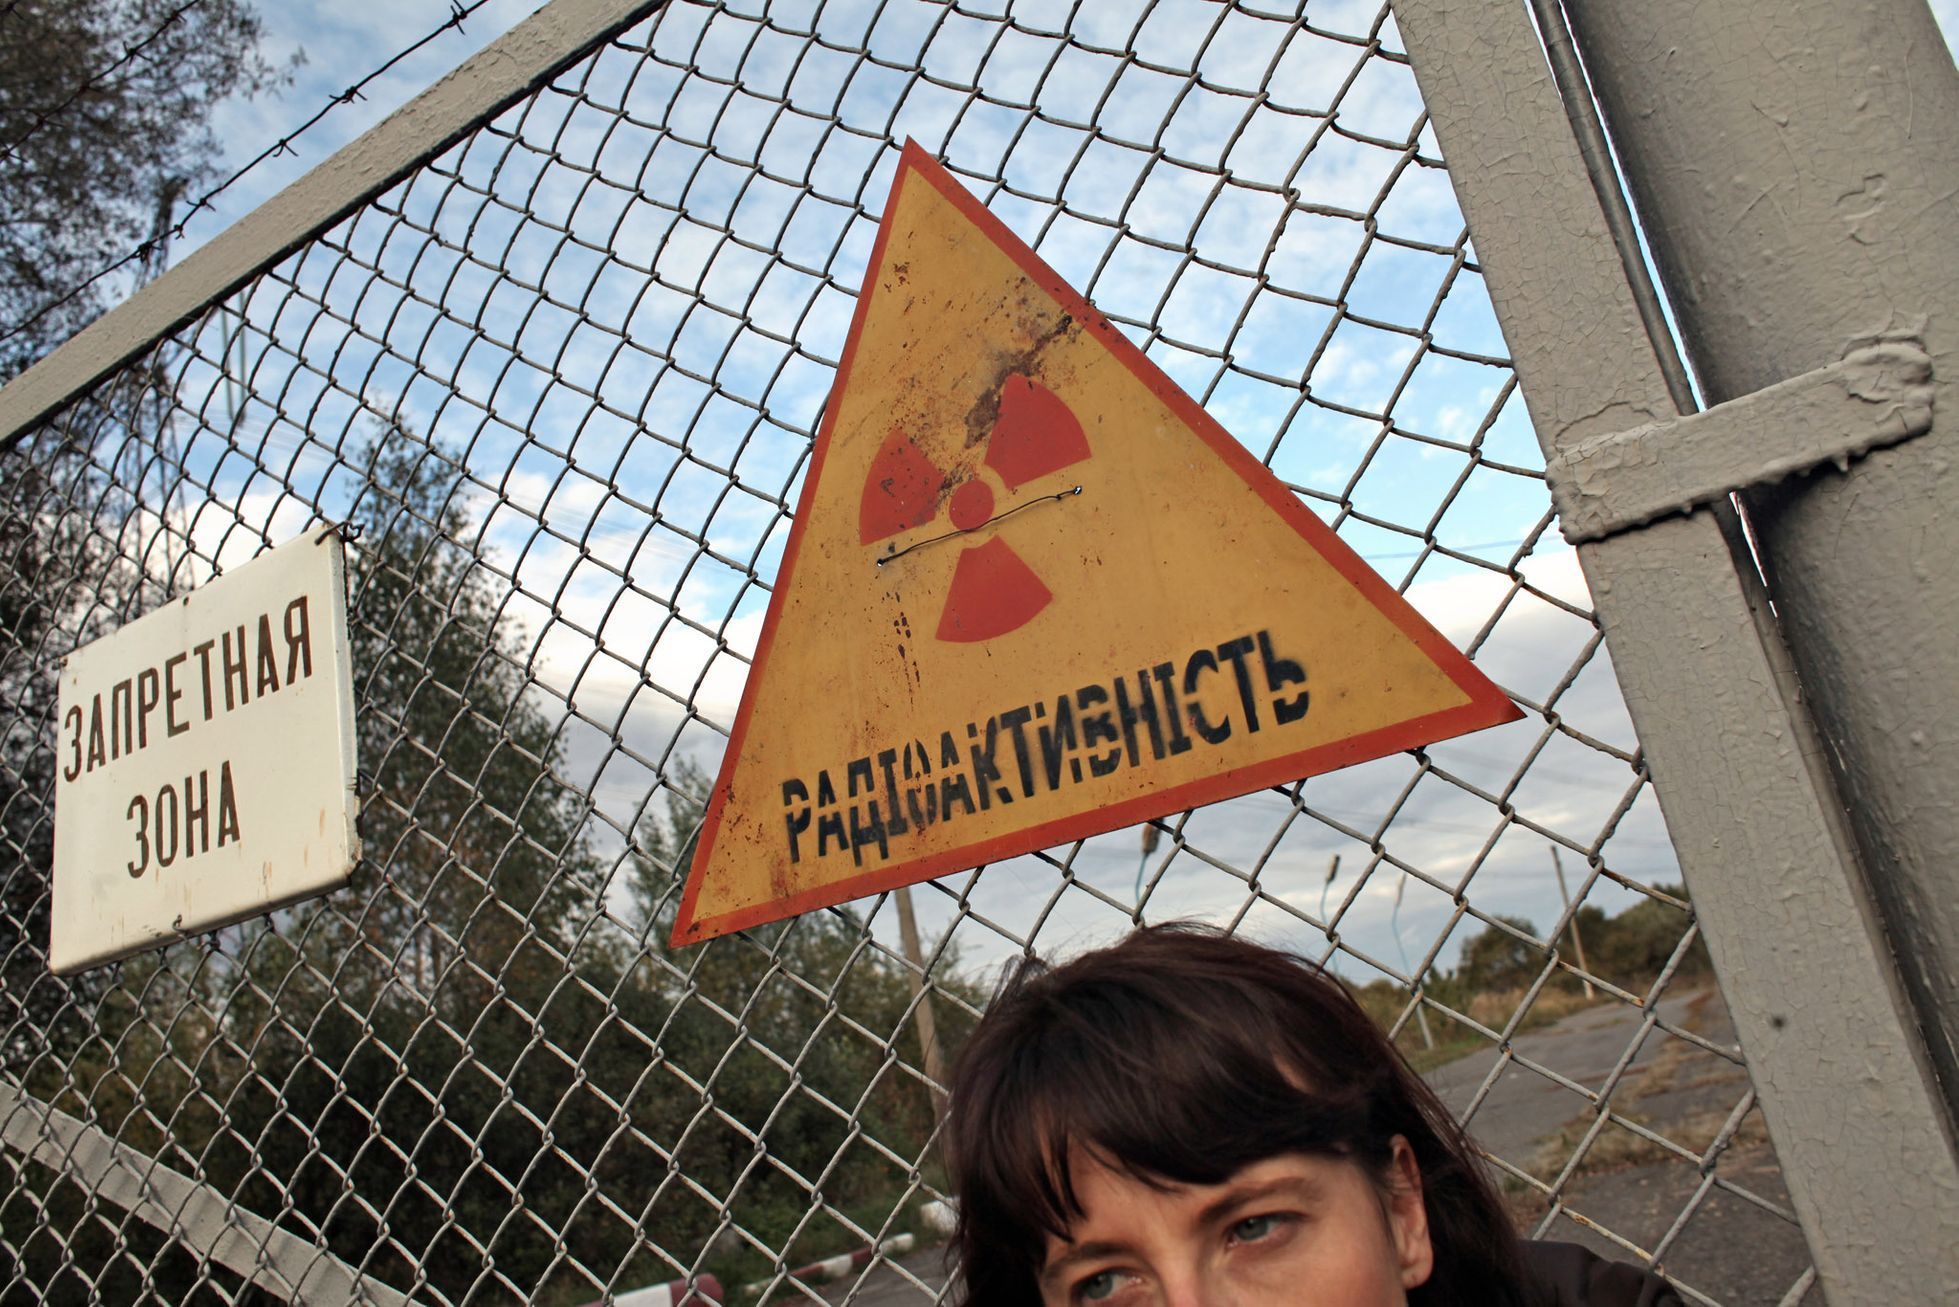 Fenomén Černobyl